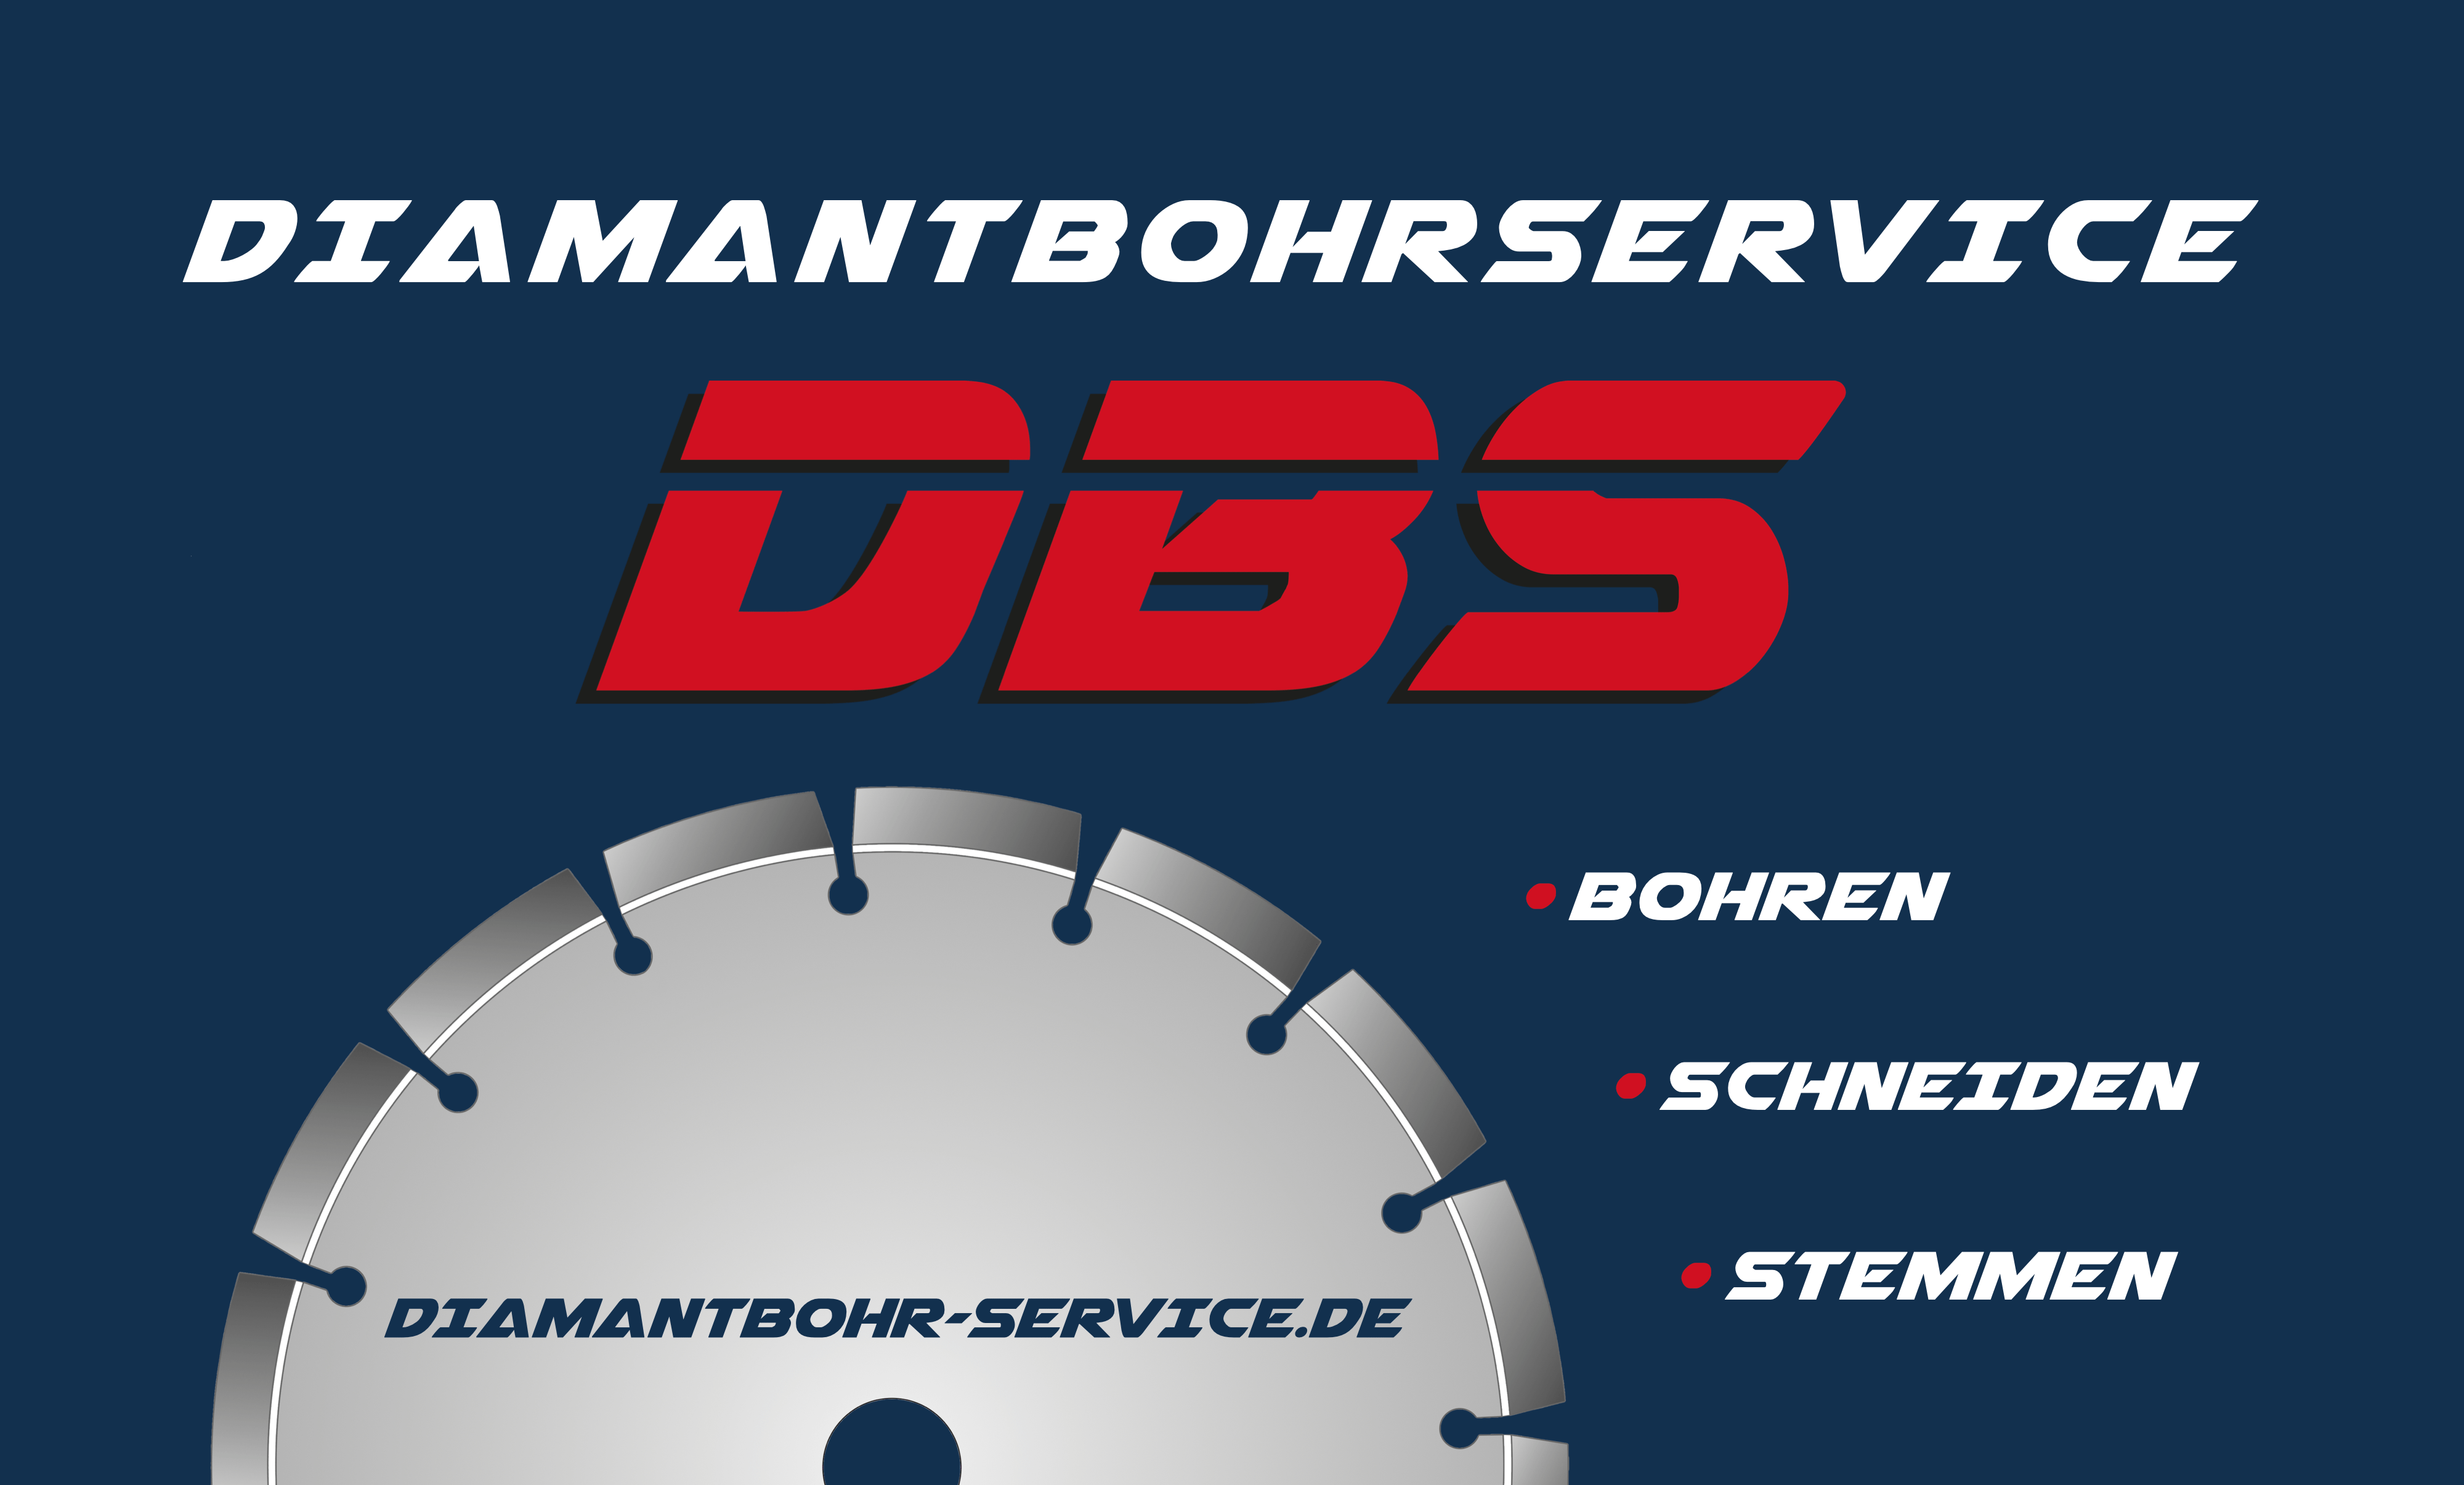 (c) Diamantbohr-service.de